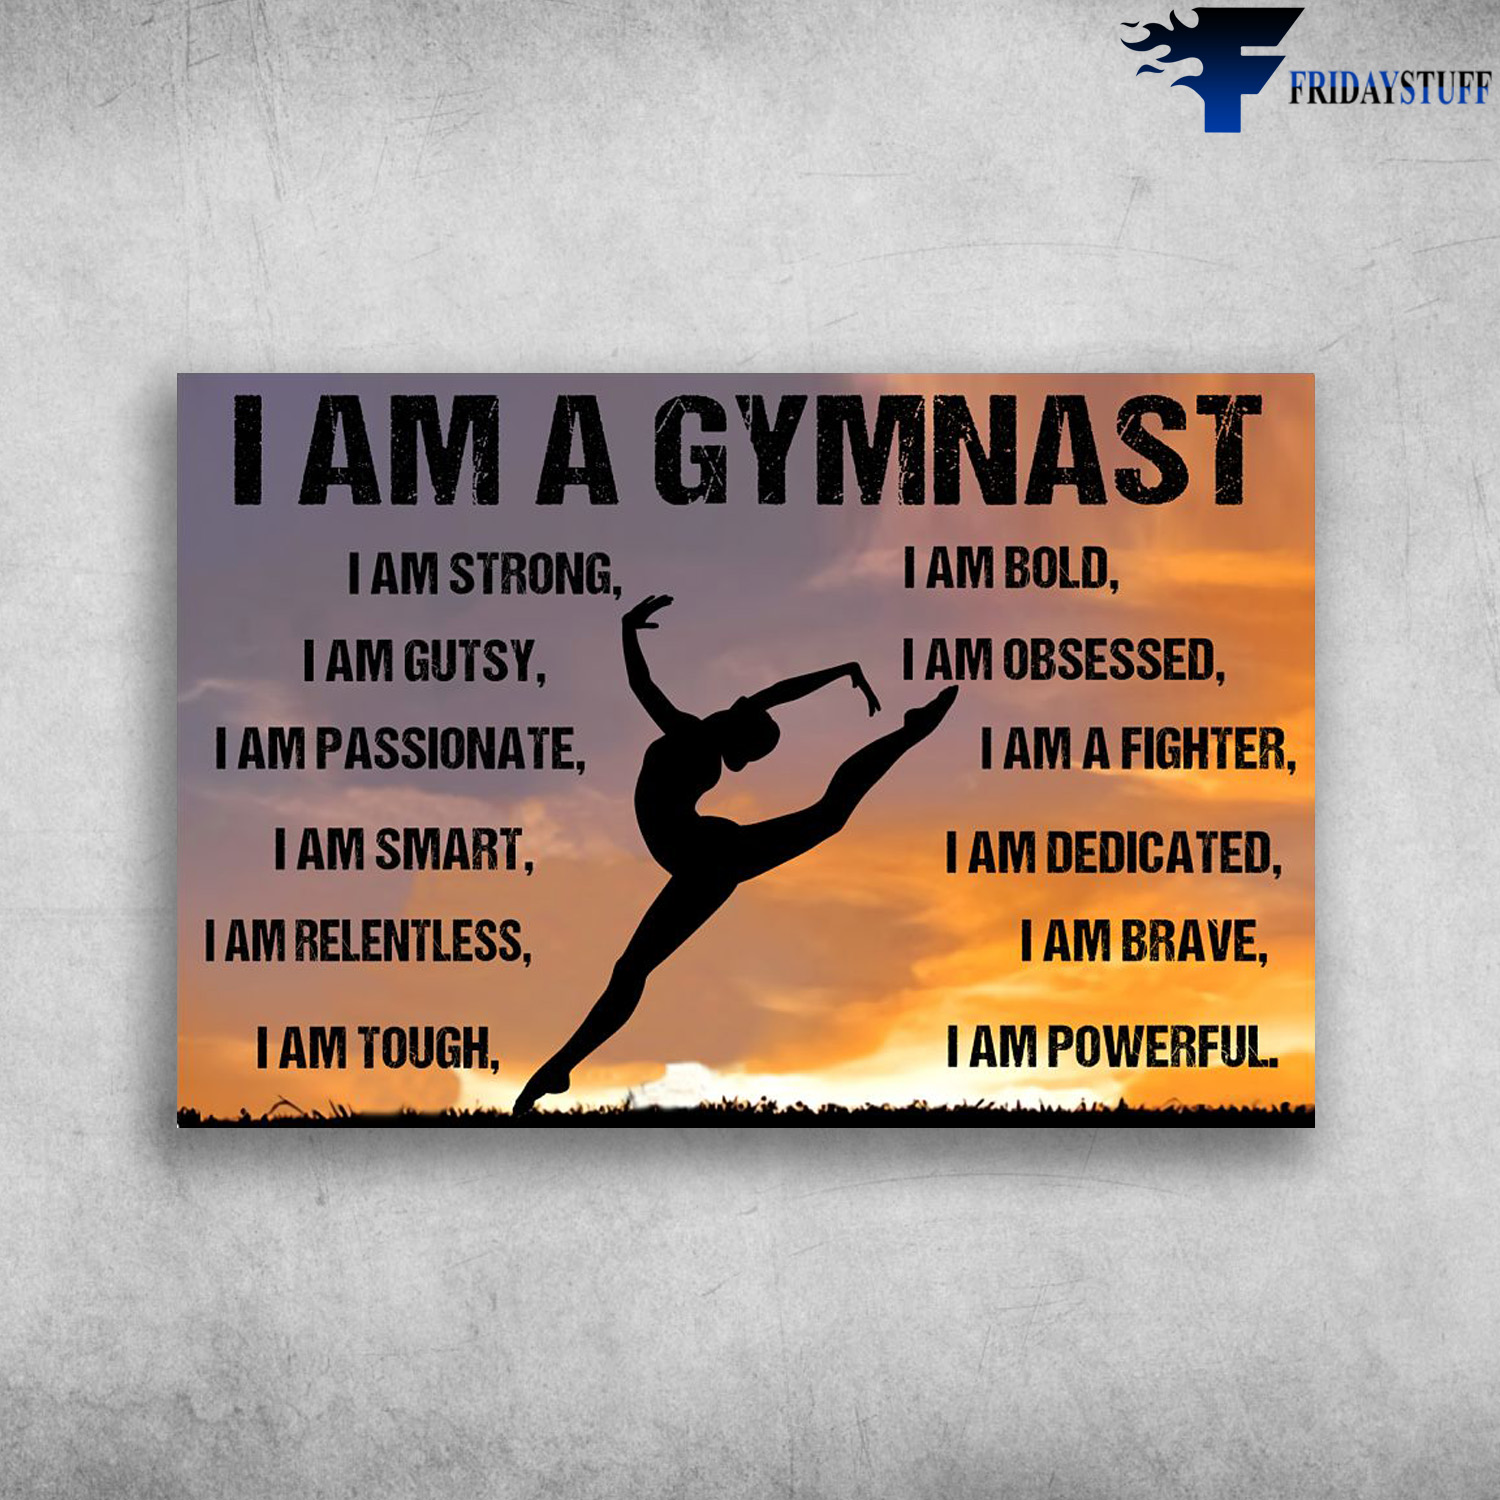 Girl Gymnast, Gym Lover - I Am A Gymnast, I Am Strong, I Am Gutsy, I Am Passionate, I Am Obsessed, I Am Fighter, I Am Smart, I Am Dedicated, I Am Relentless, I Am Brave, I Am Tough, I A Powerful